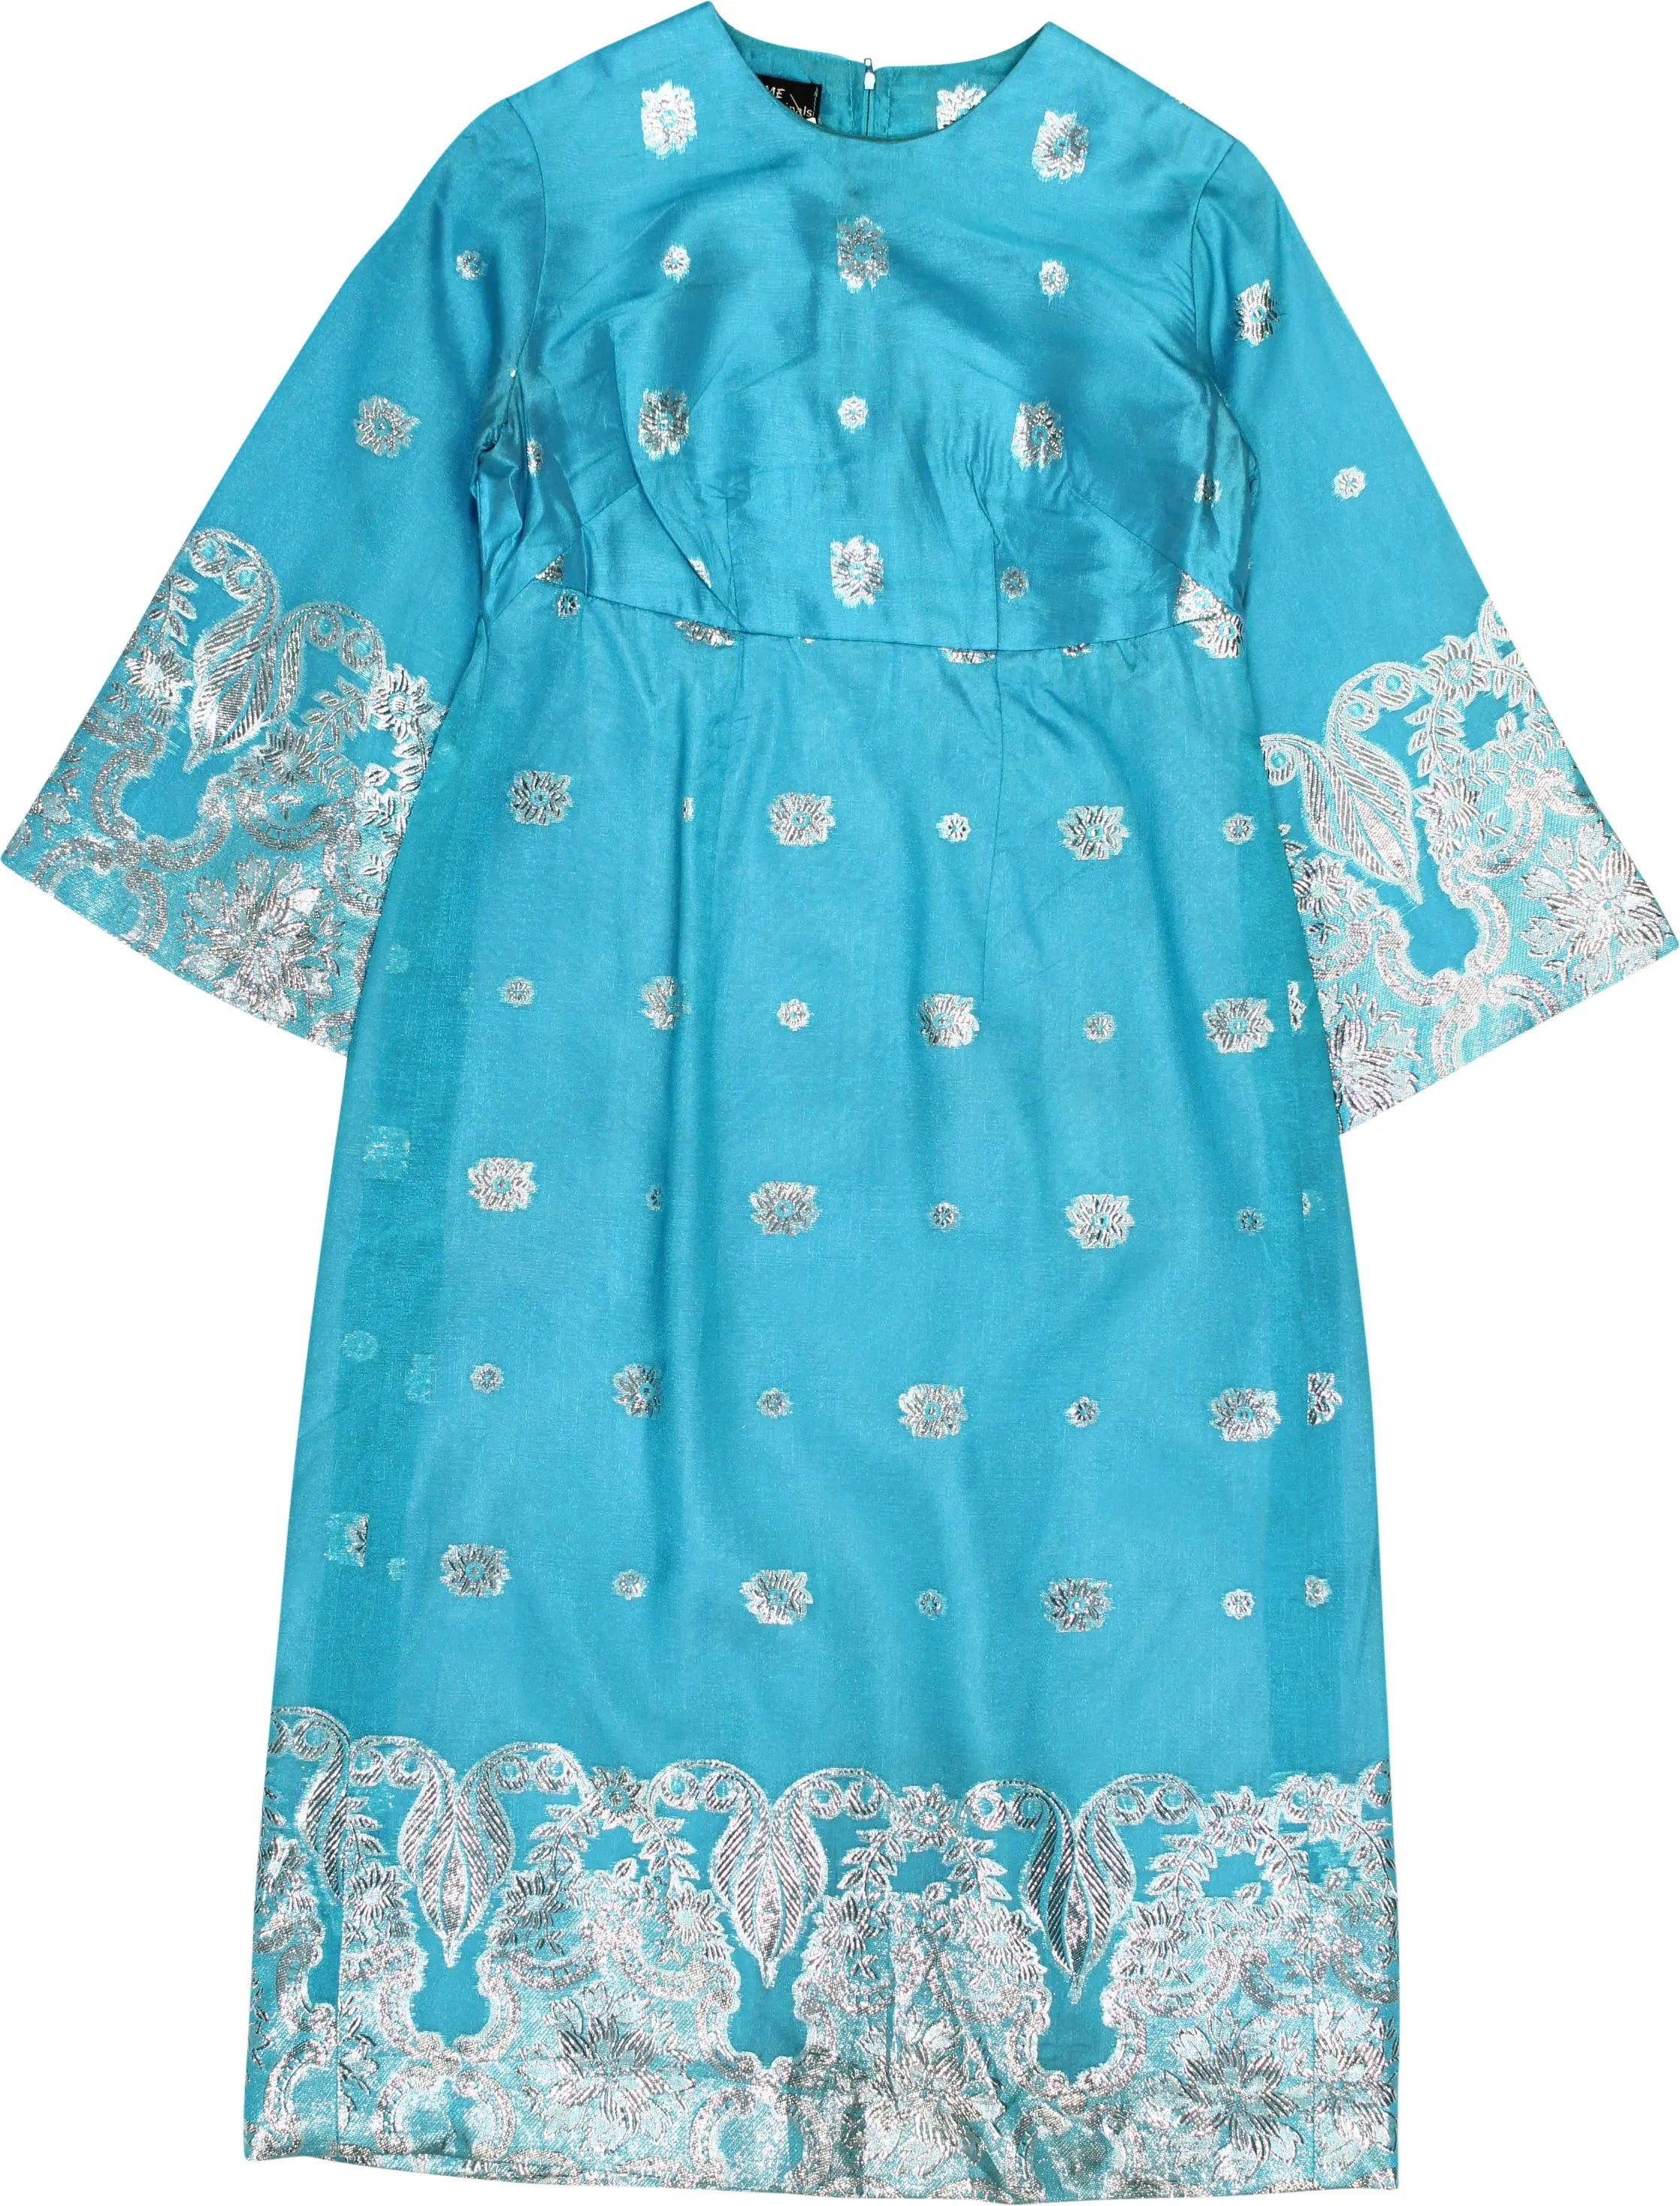 Sadame Originals - 60s Dress- ThriftTale.com - Vintage and second handclothing